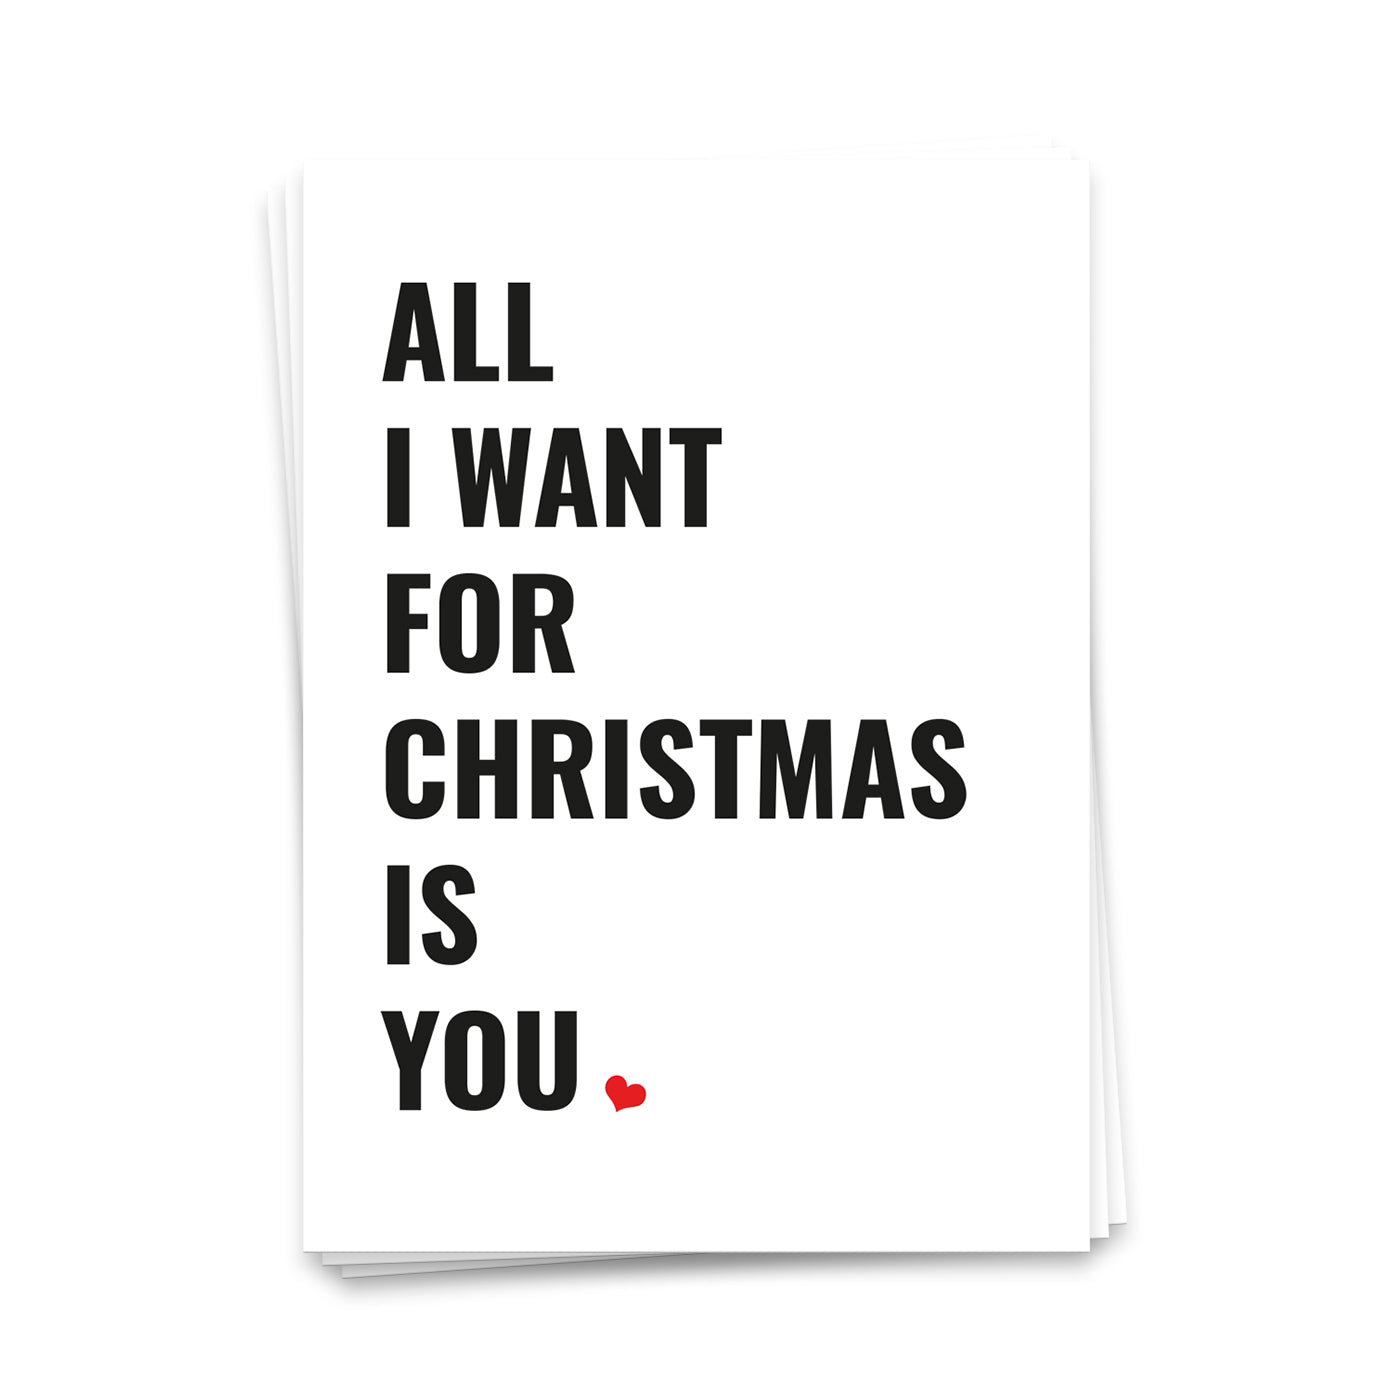 All i want for christmas is you - Postkarte